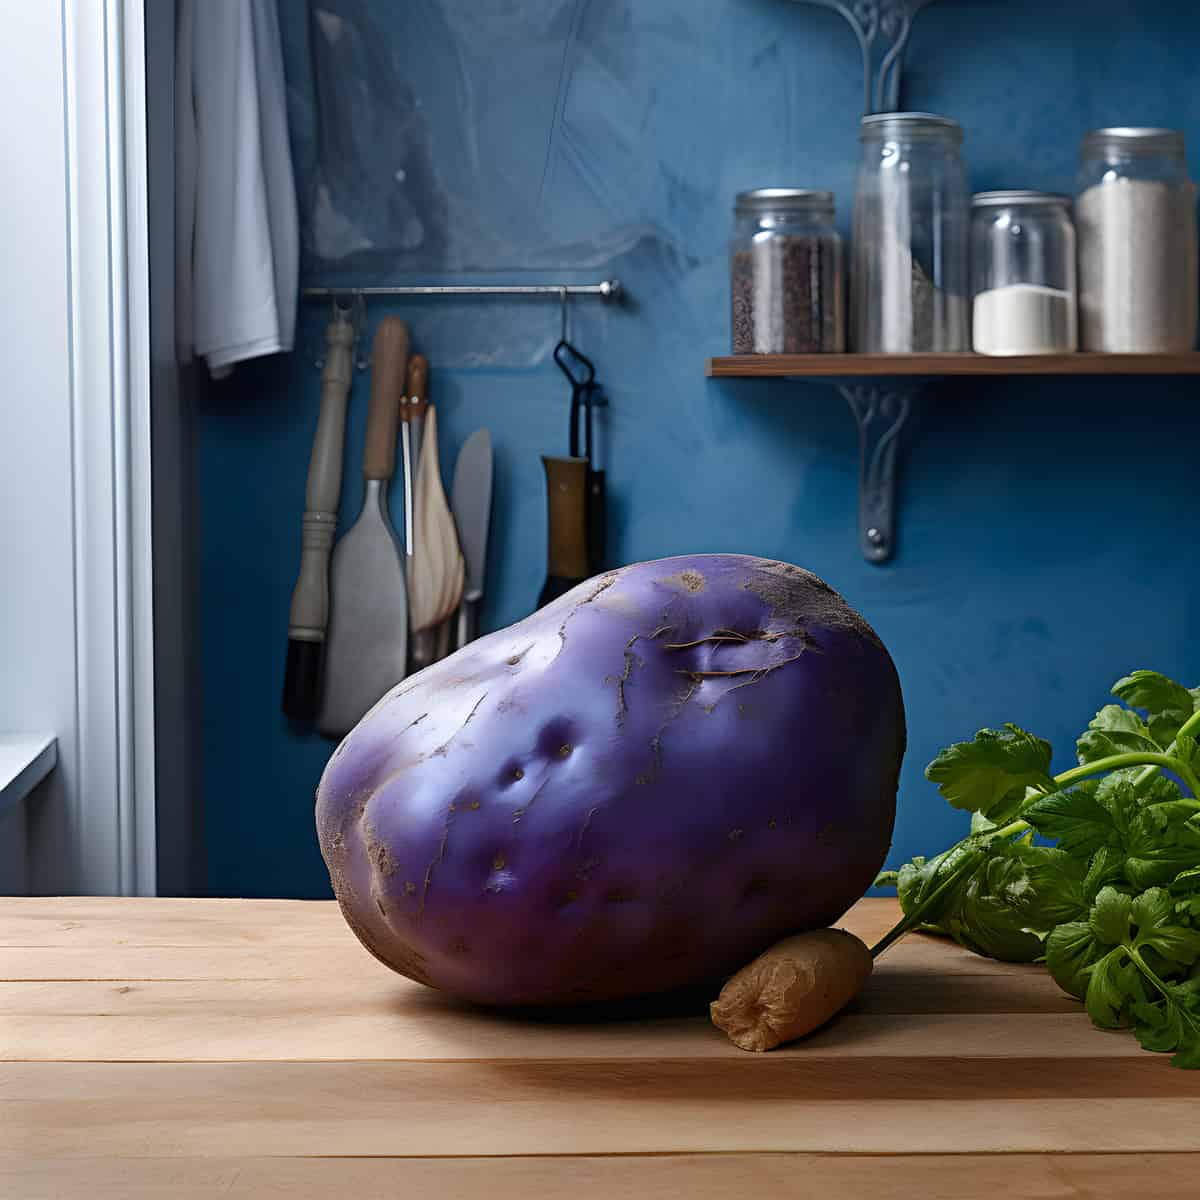 Oldenburger Blaue Potatoes on a kitchen counter